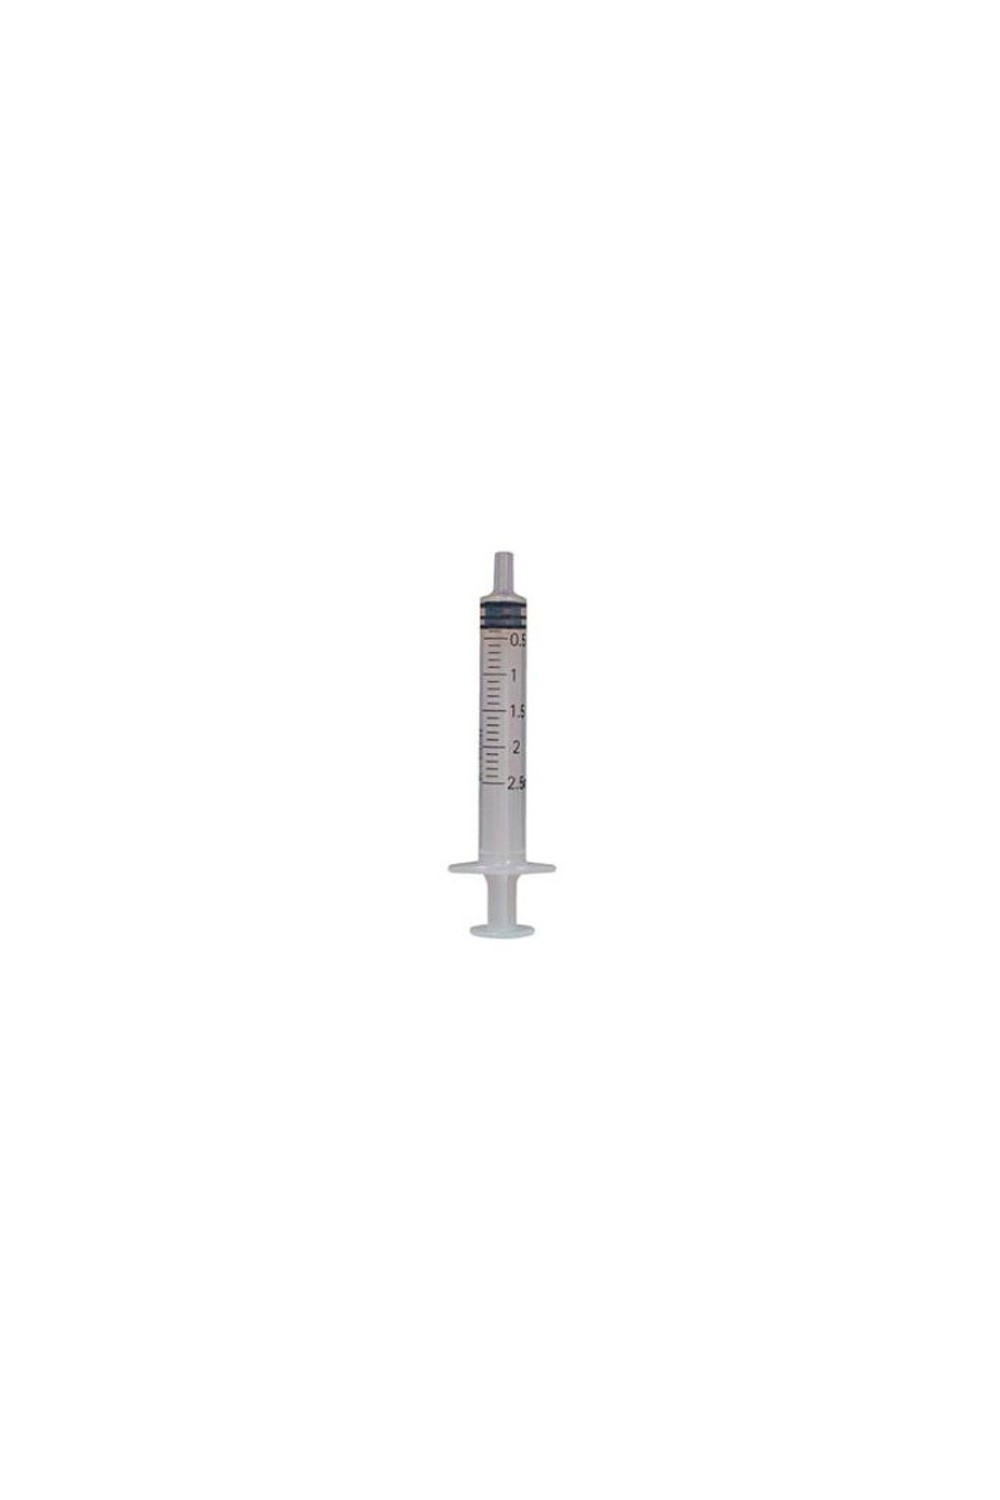 ICO Sterile Syringe Thick Cone 2,5ml